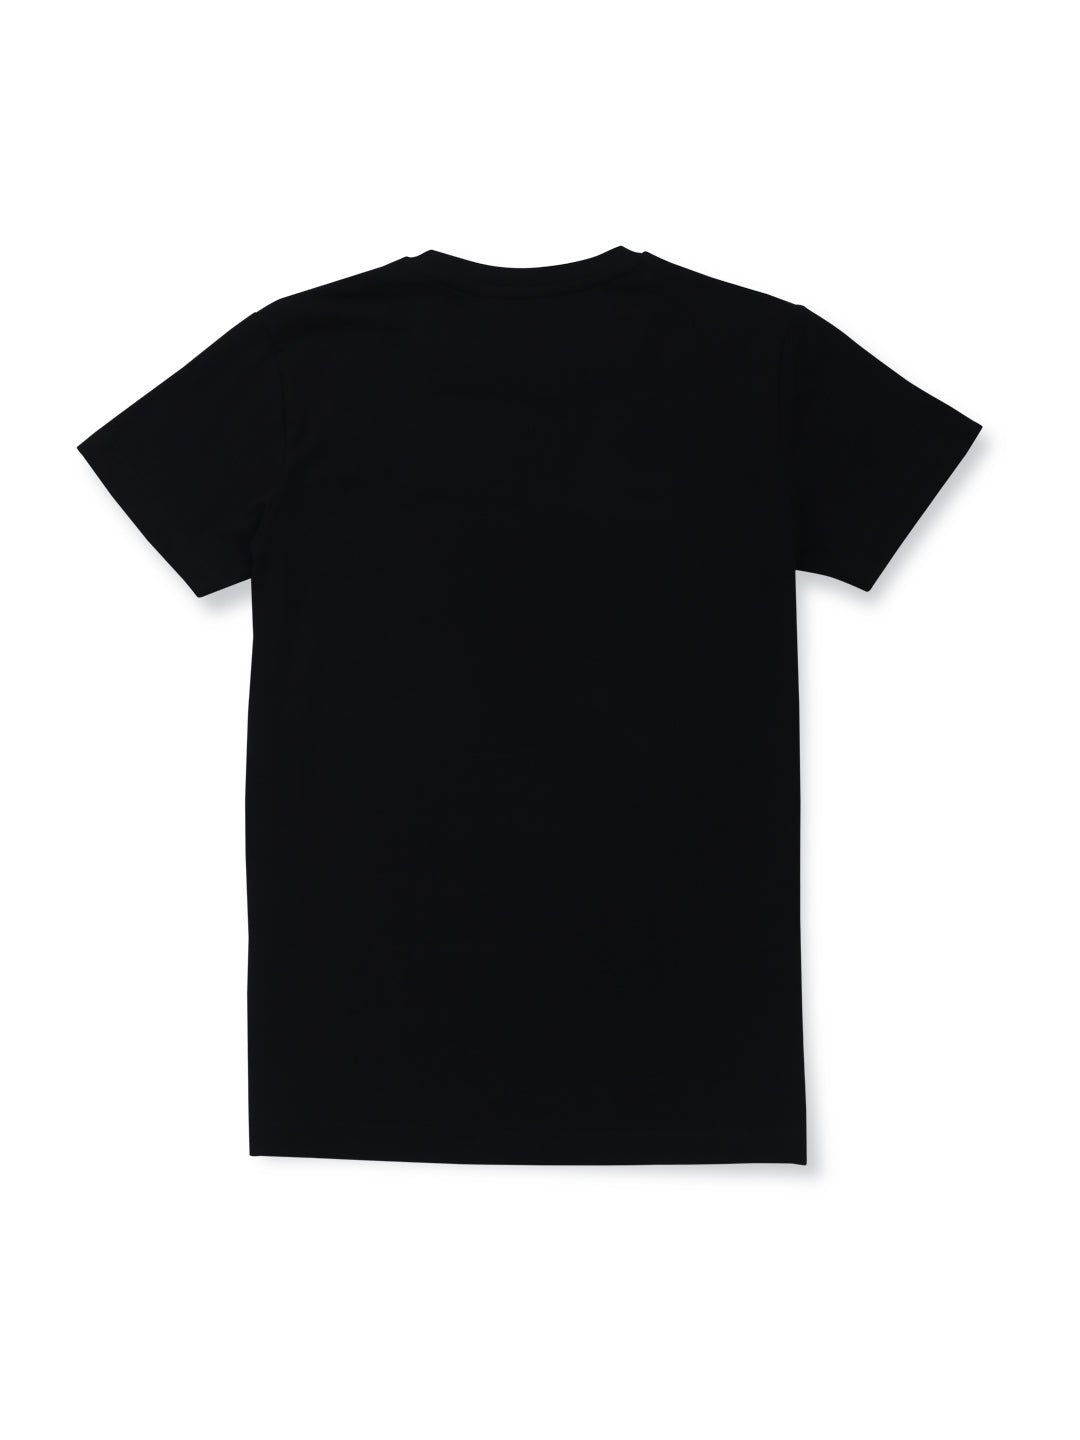 Boys Black Solid Cotton T-Shirt